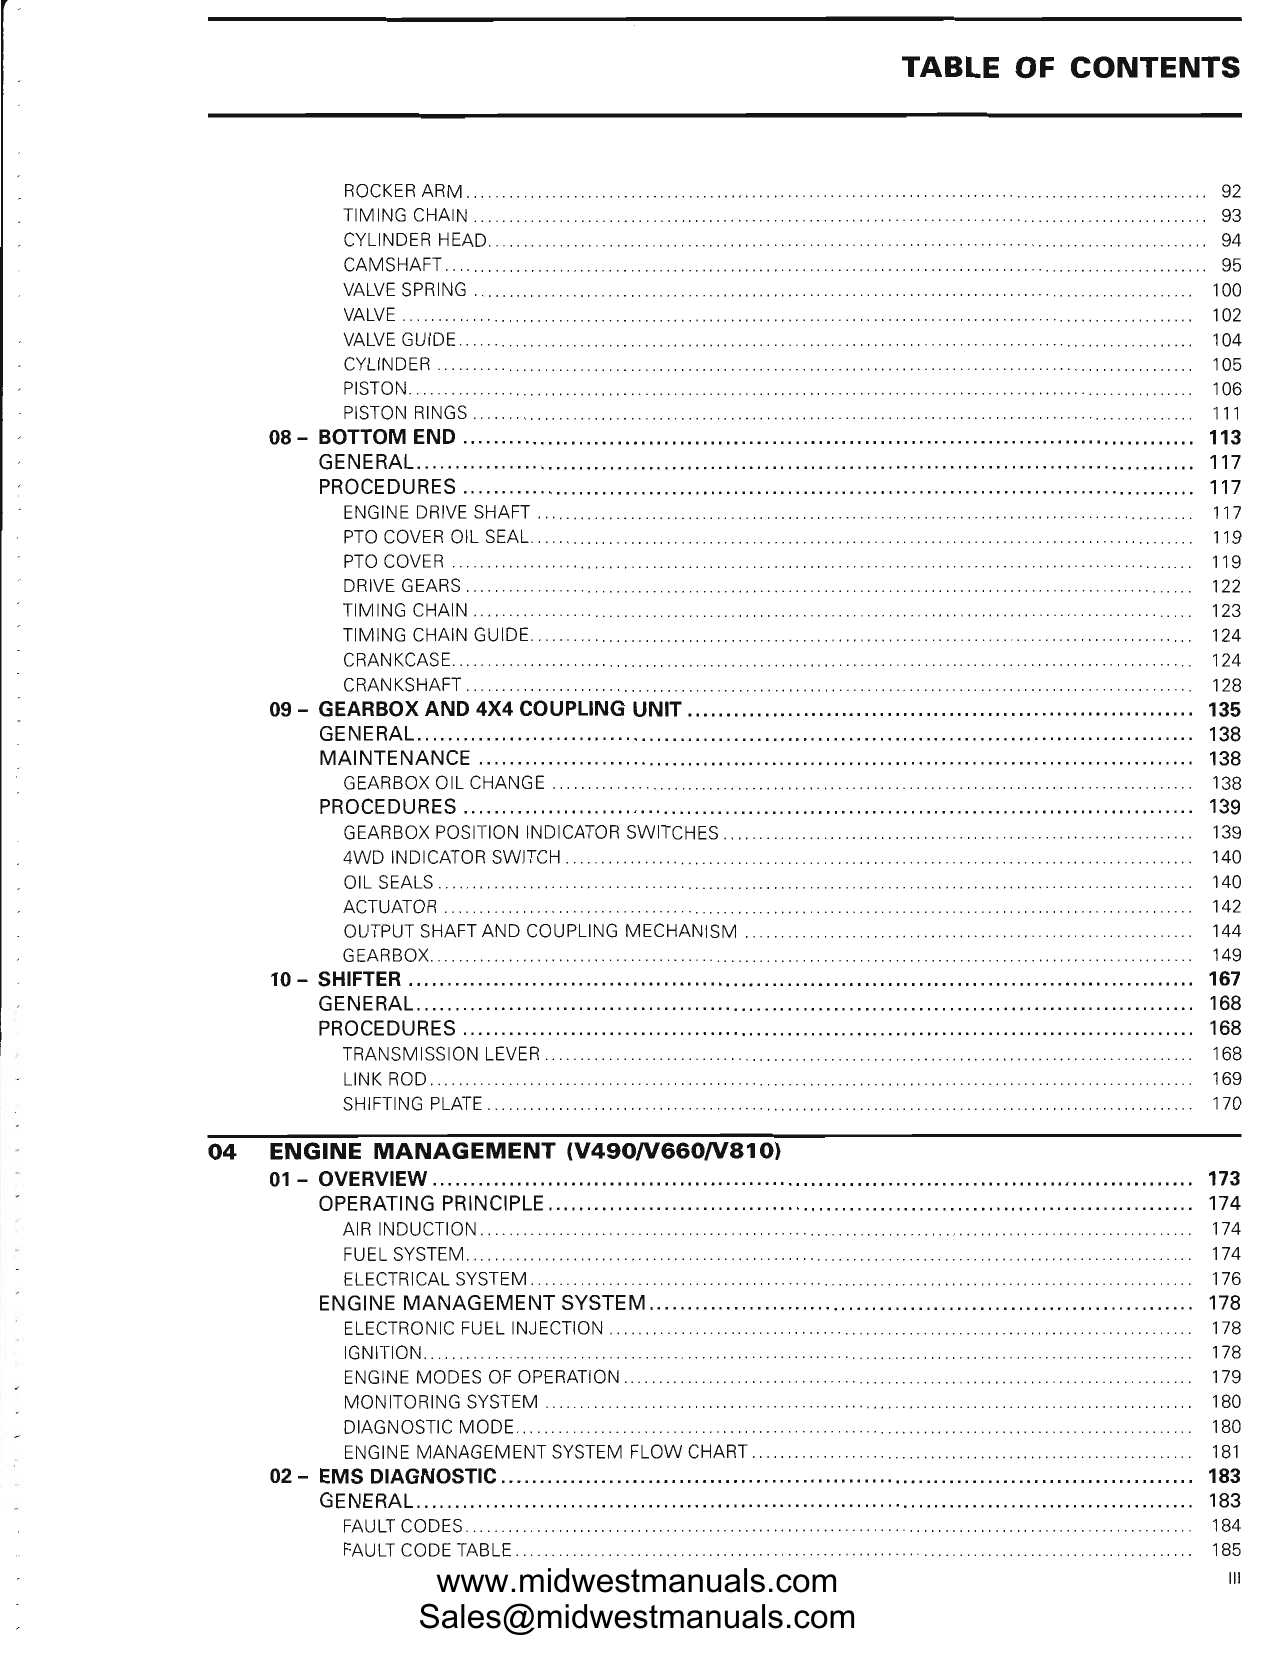 2009 Can-Am Outlander, Renegade 500, 650, 800 ATV service manual Preview image 5